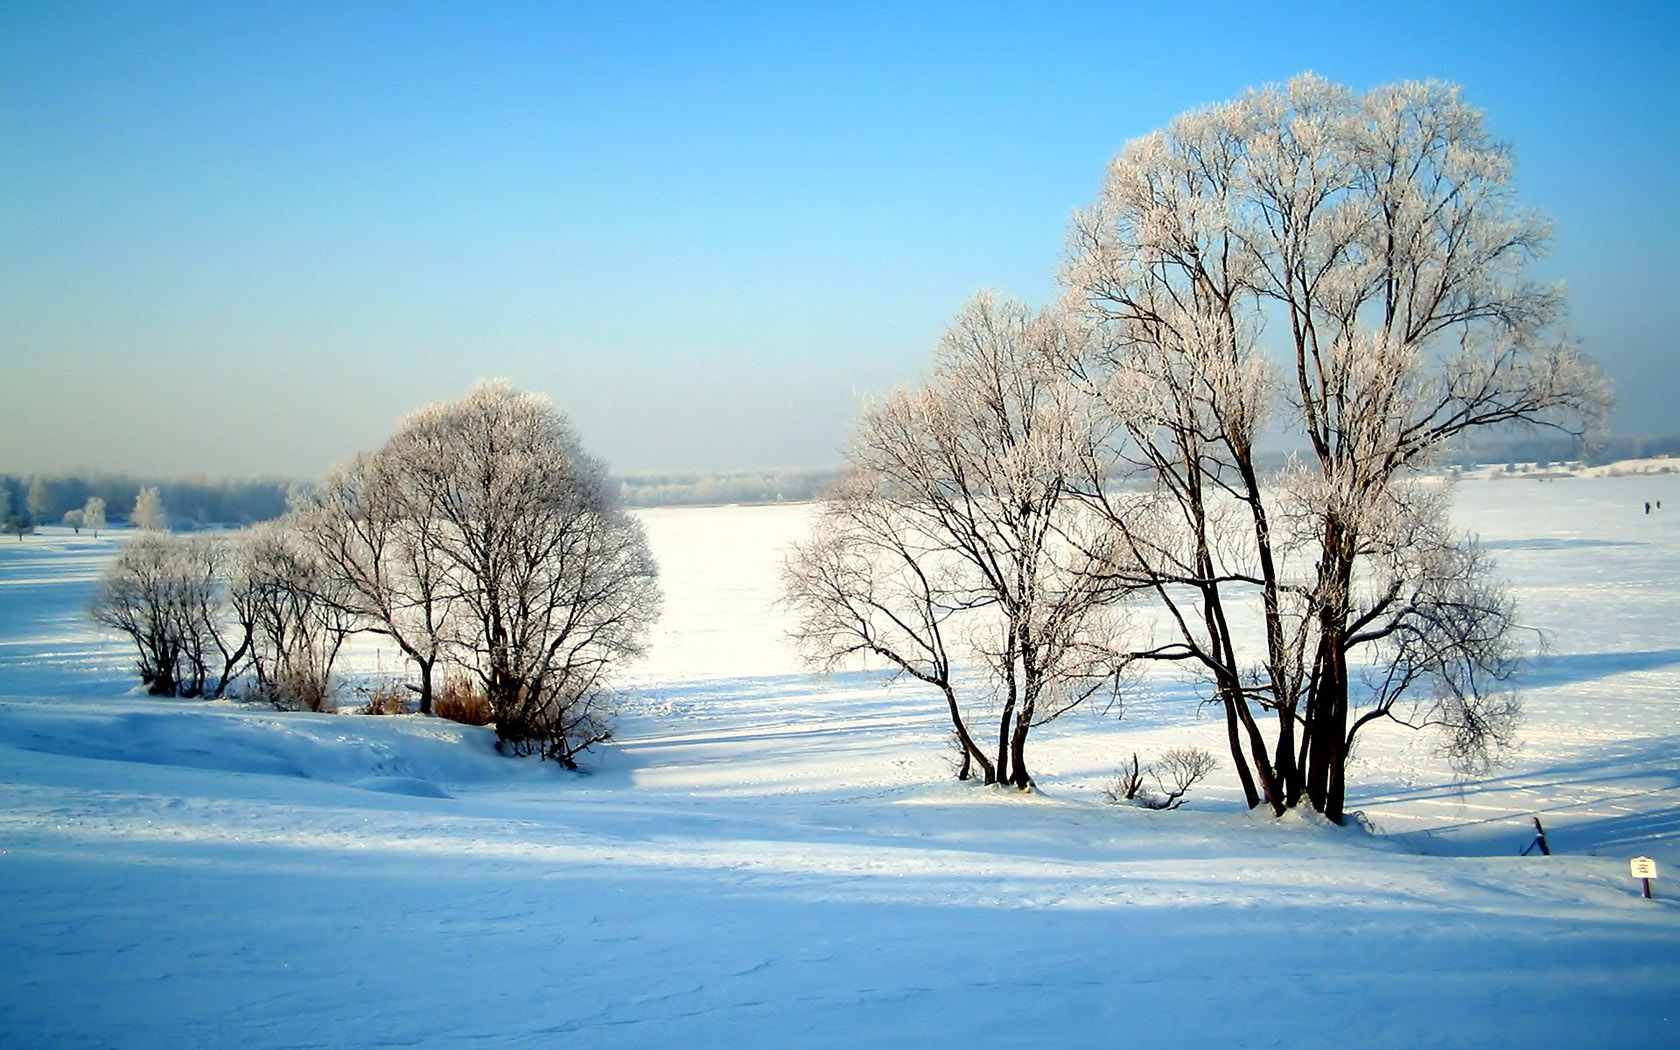 16001050 Widescreen Winter Snow Scenery - Dreamy Winter Snow